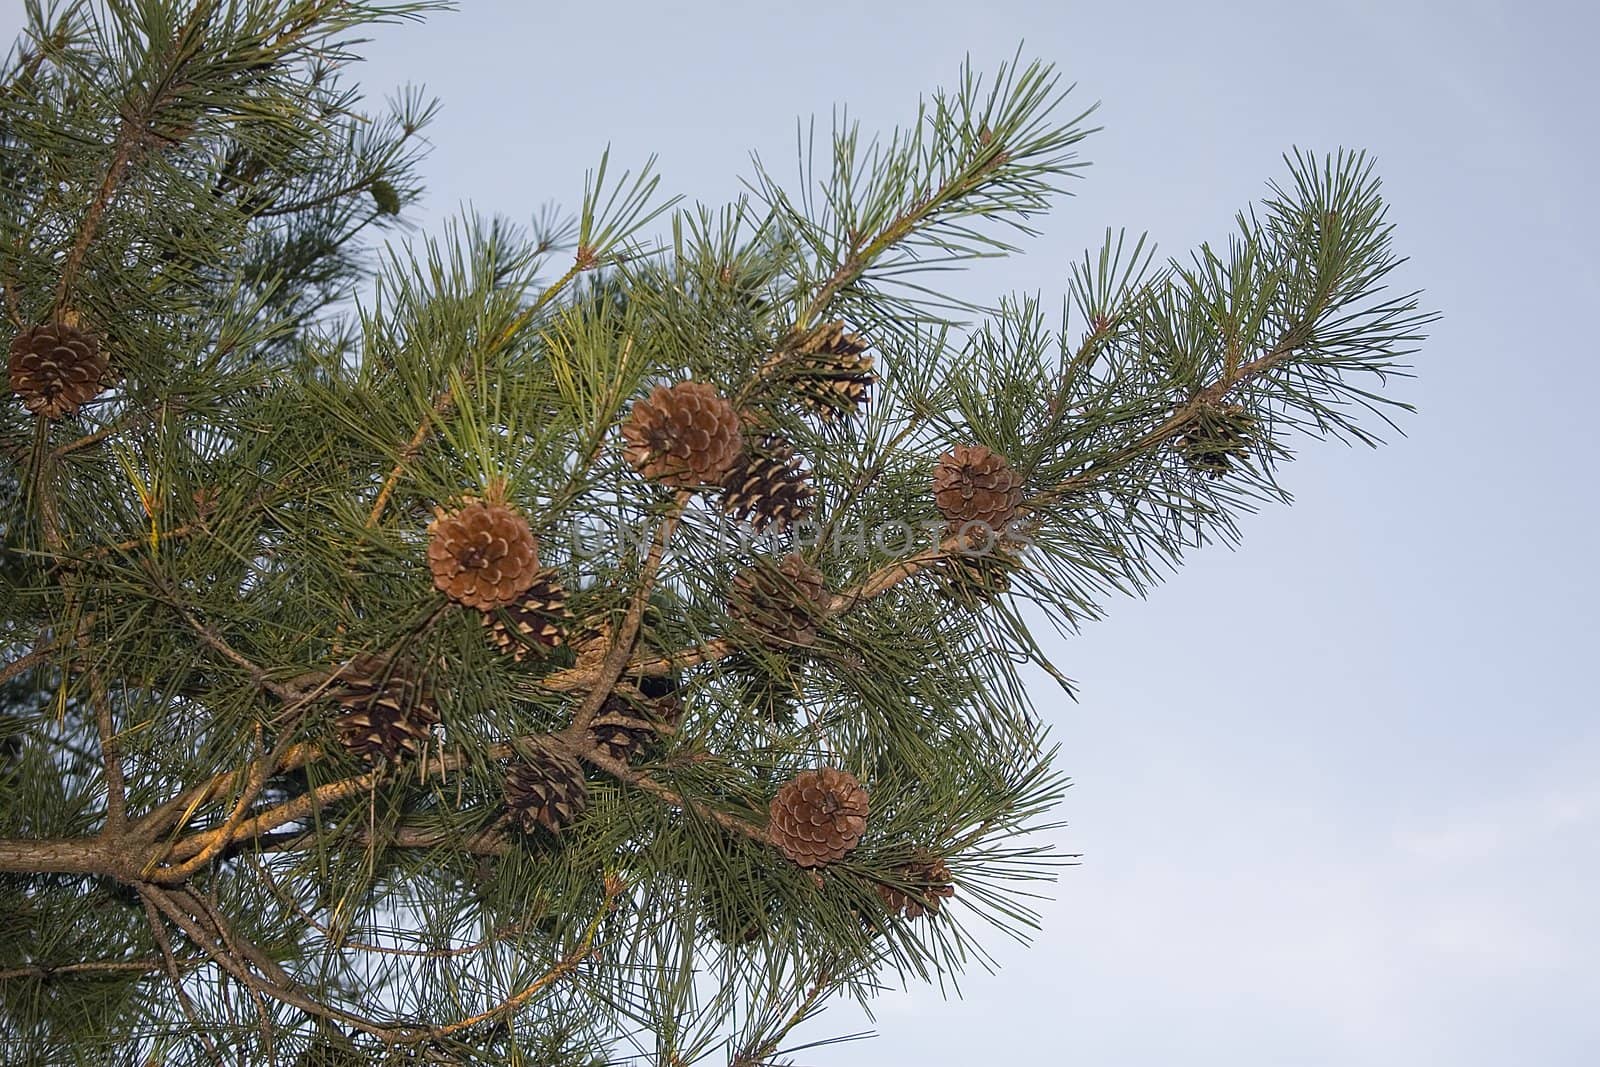 Pine Cones on Tree by suwanneeredhead